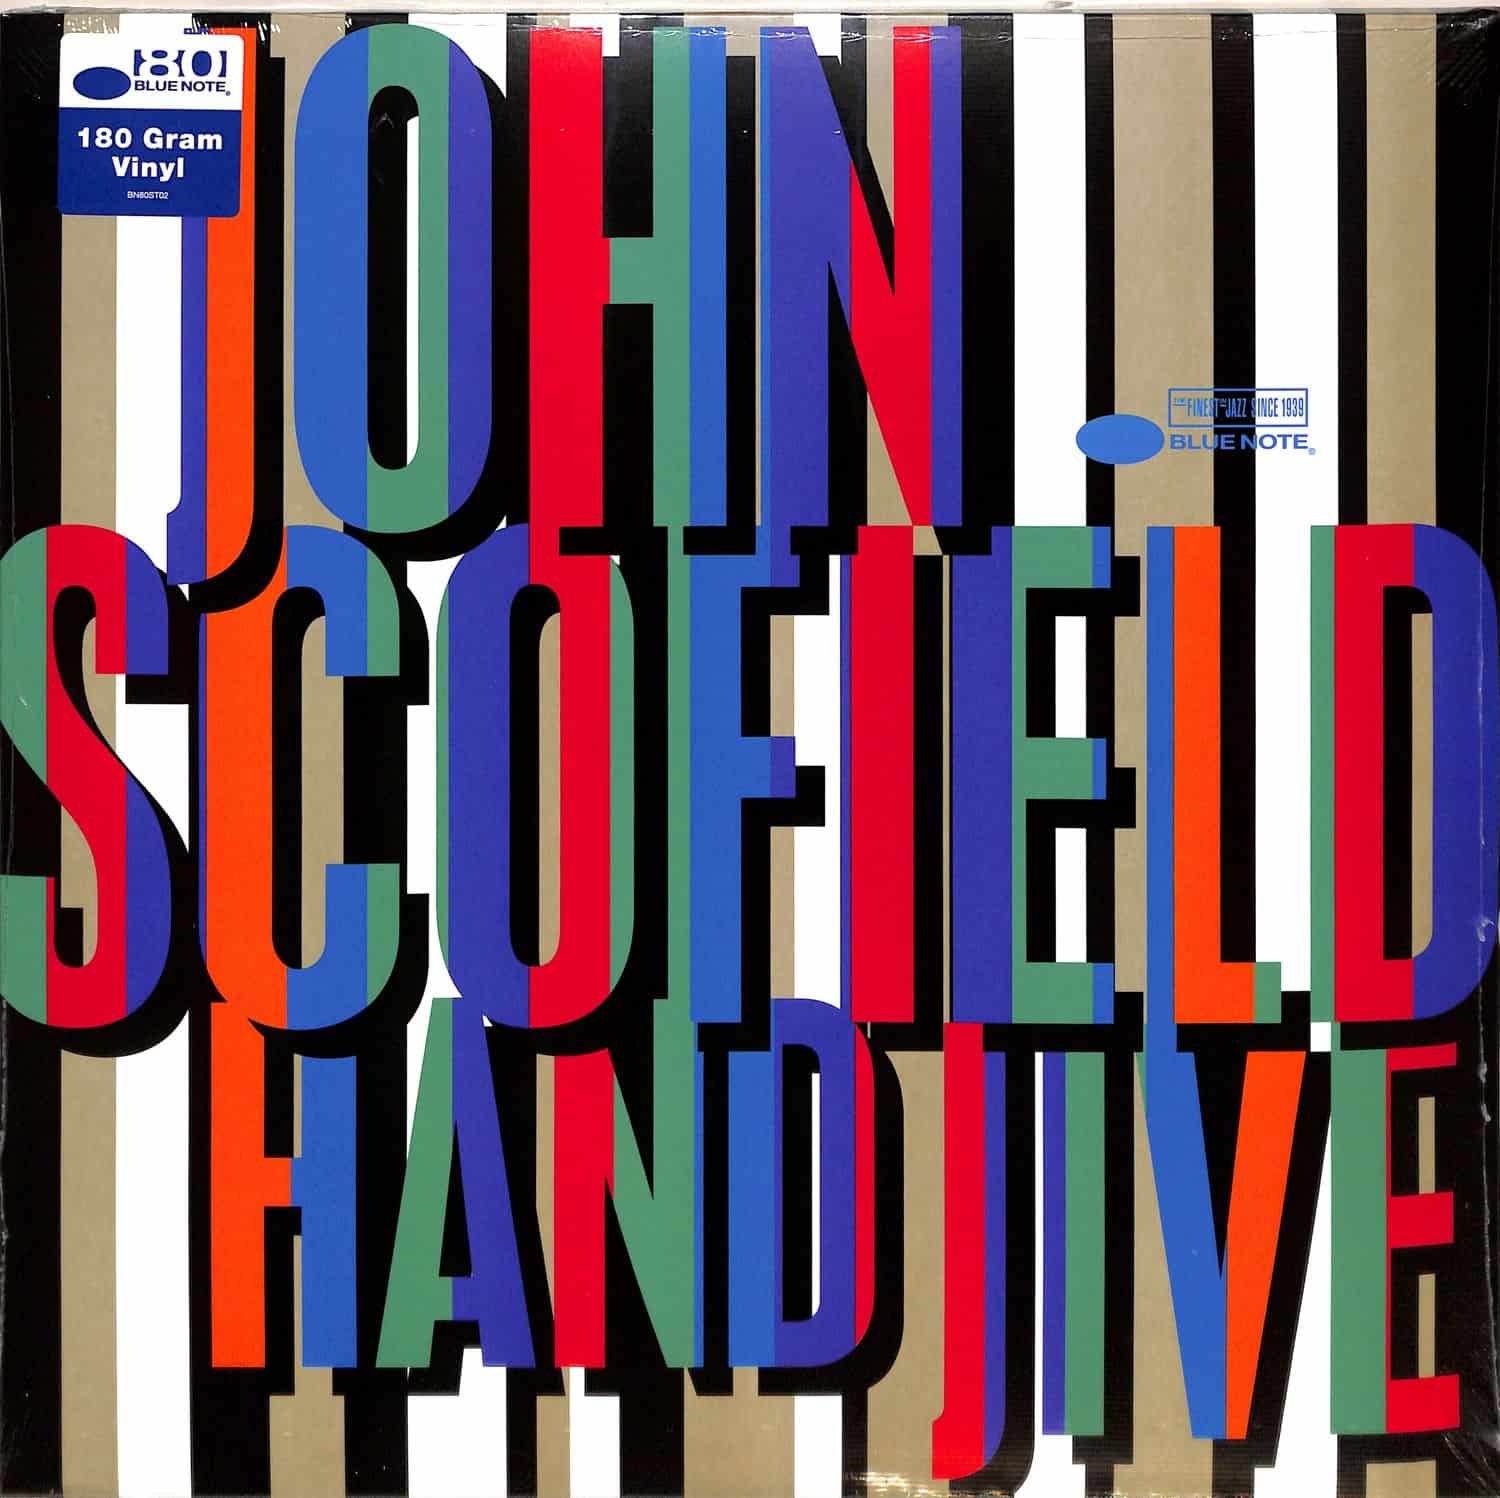 John Scofield - HAND JIVE 